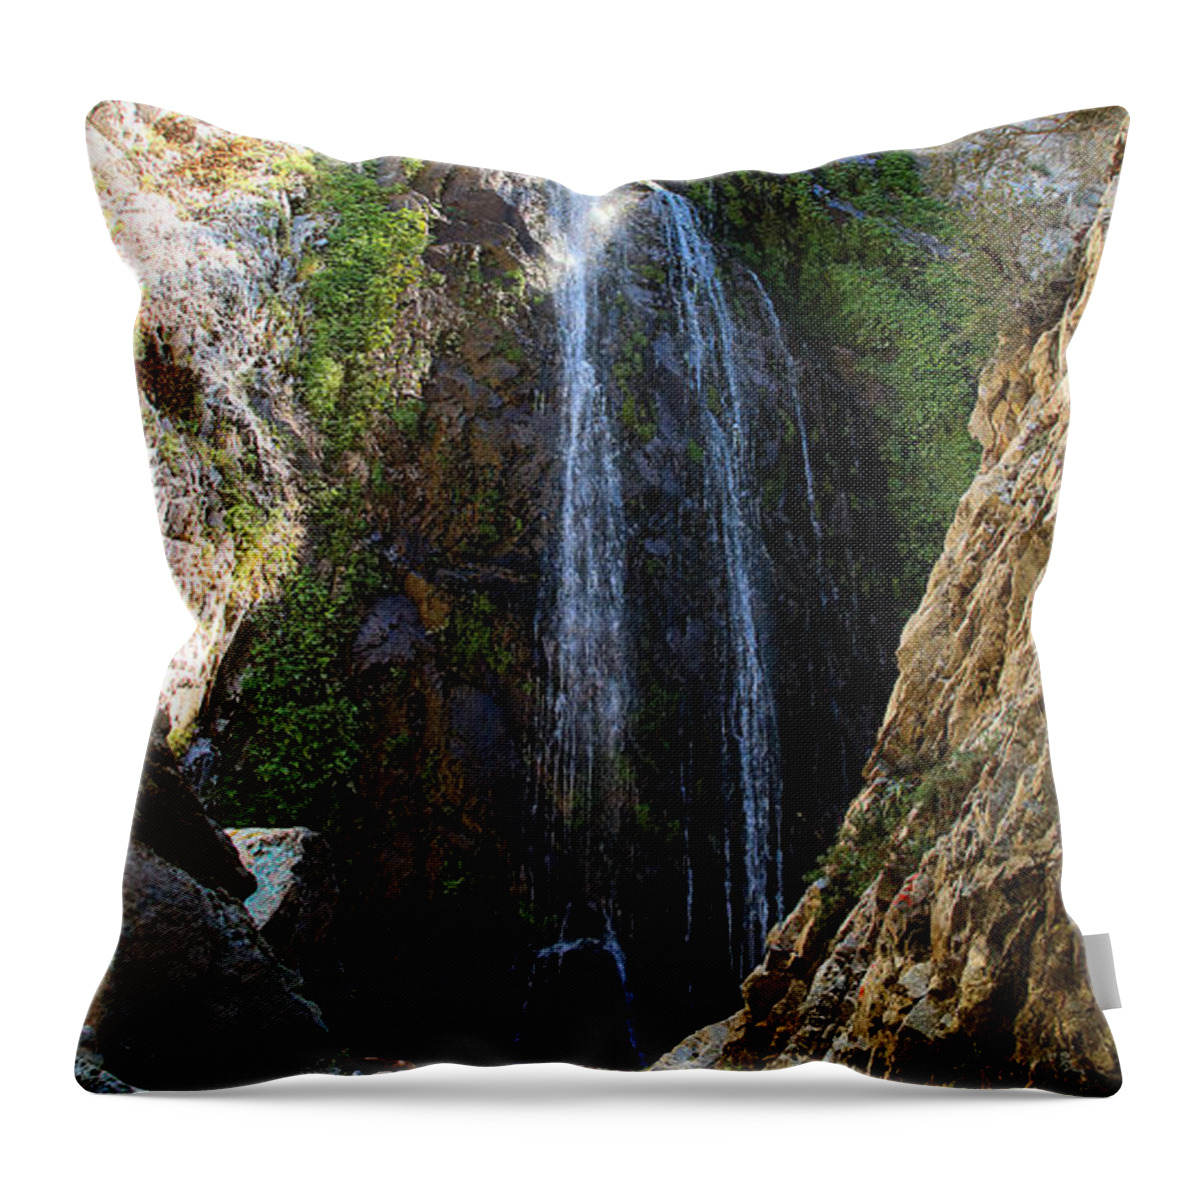 Bonita Falls In Full High Throw Pillow featuring the photograph Bonita Falls In Full High by Viktor Savchenko